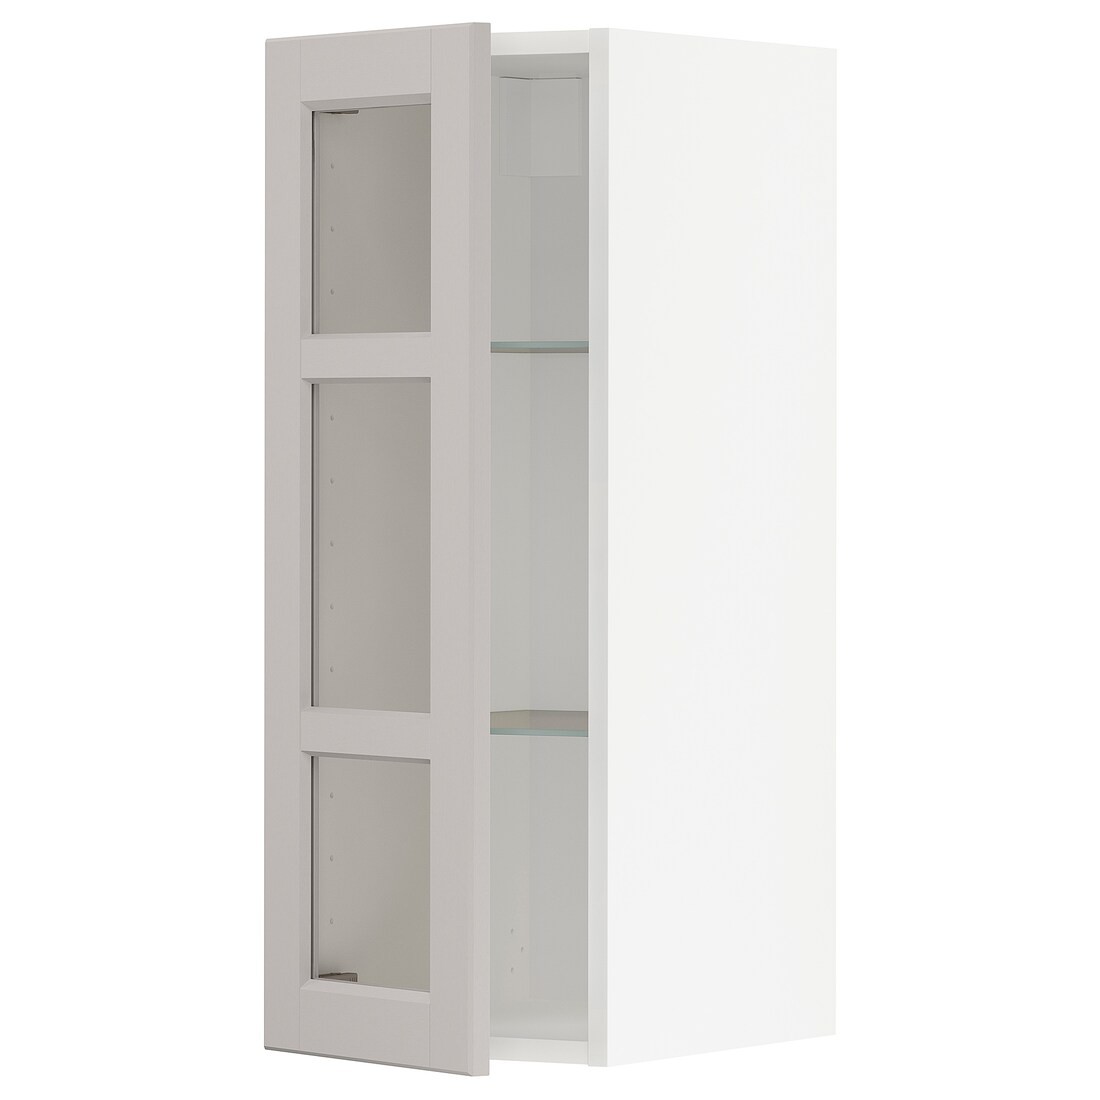 METOD МЕТОД Навесной шкаф, белый / Lerhyttan светло-серый, 30x80 см